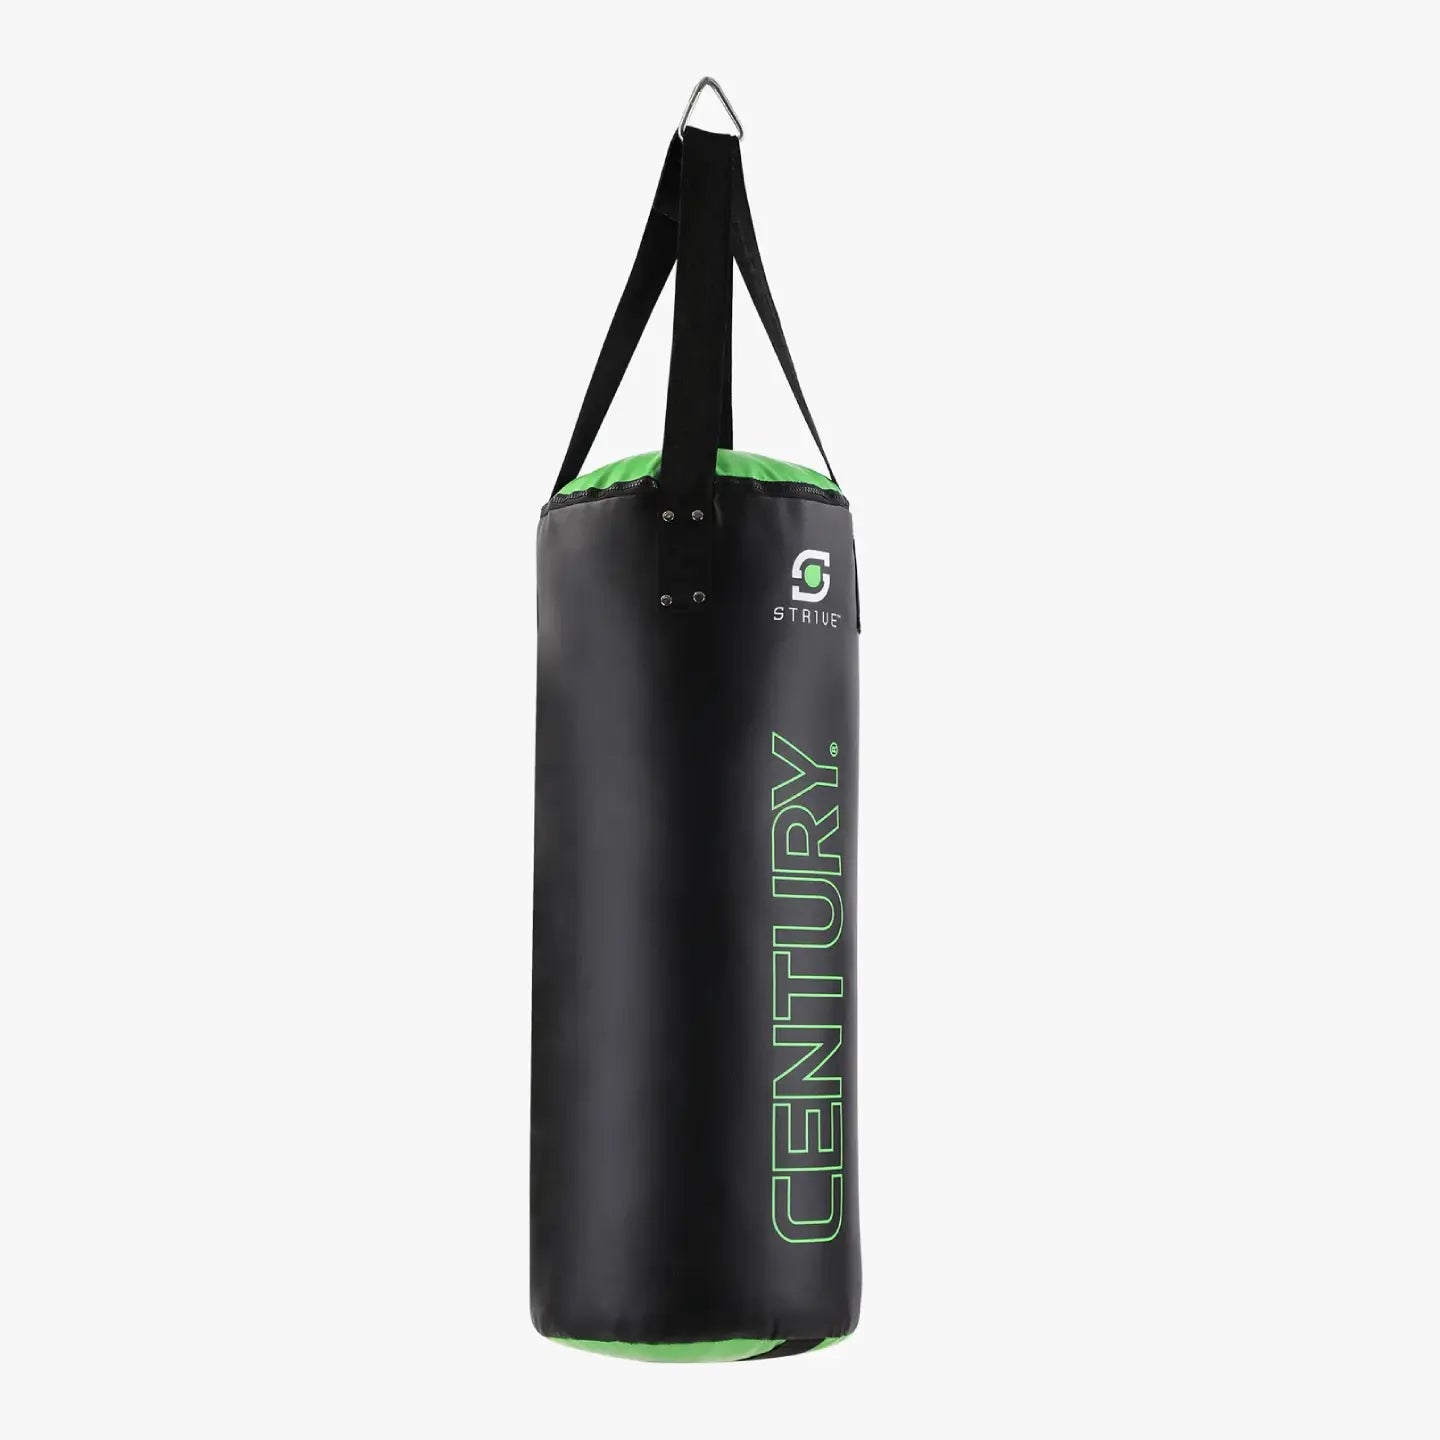 Century - Strive Fitness Bag 40lb